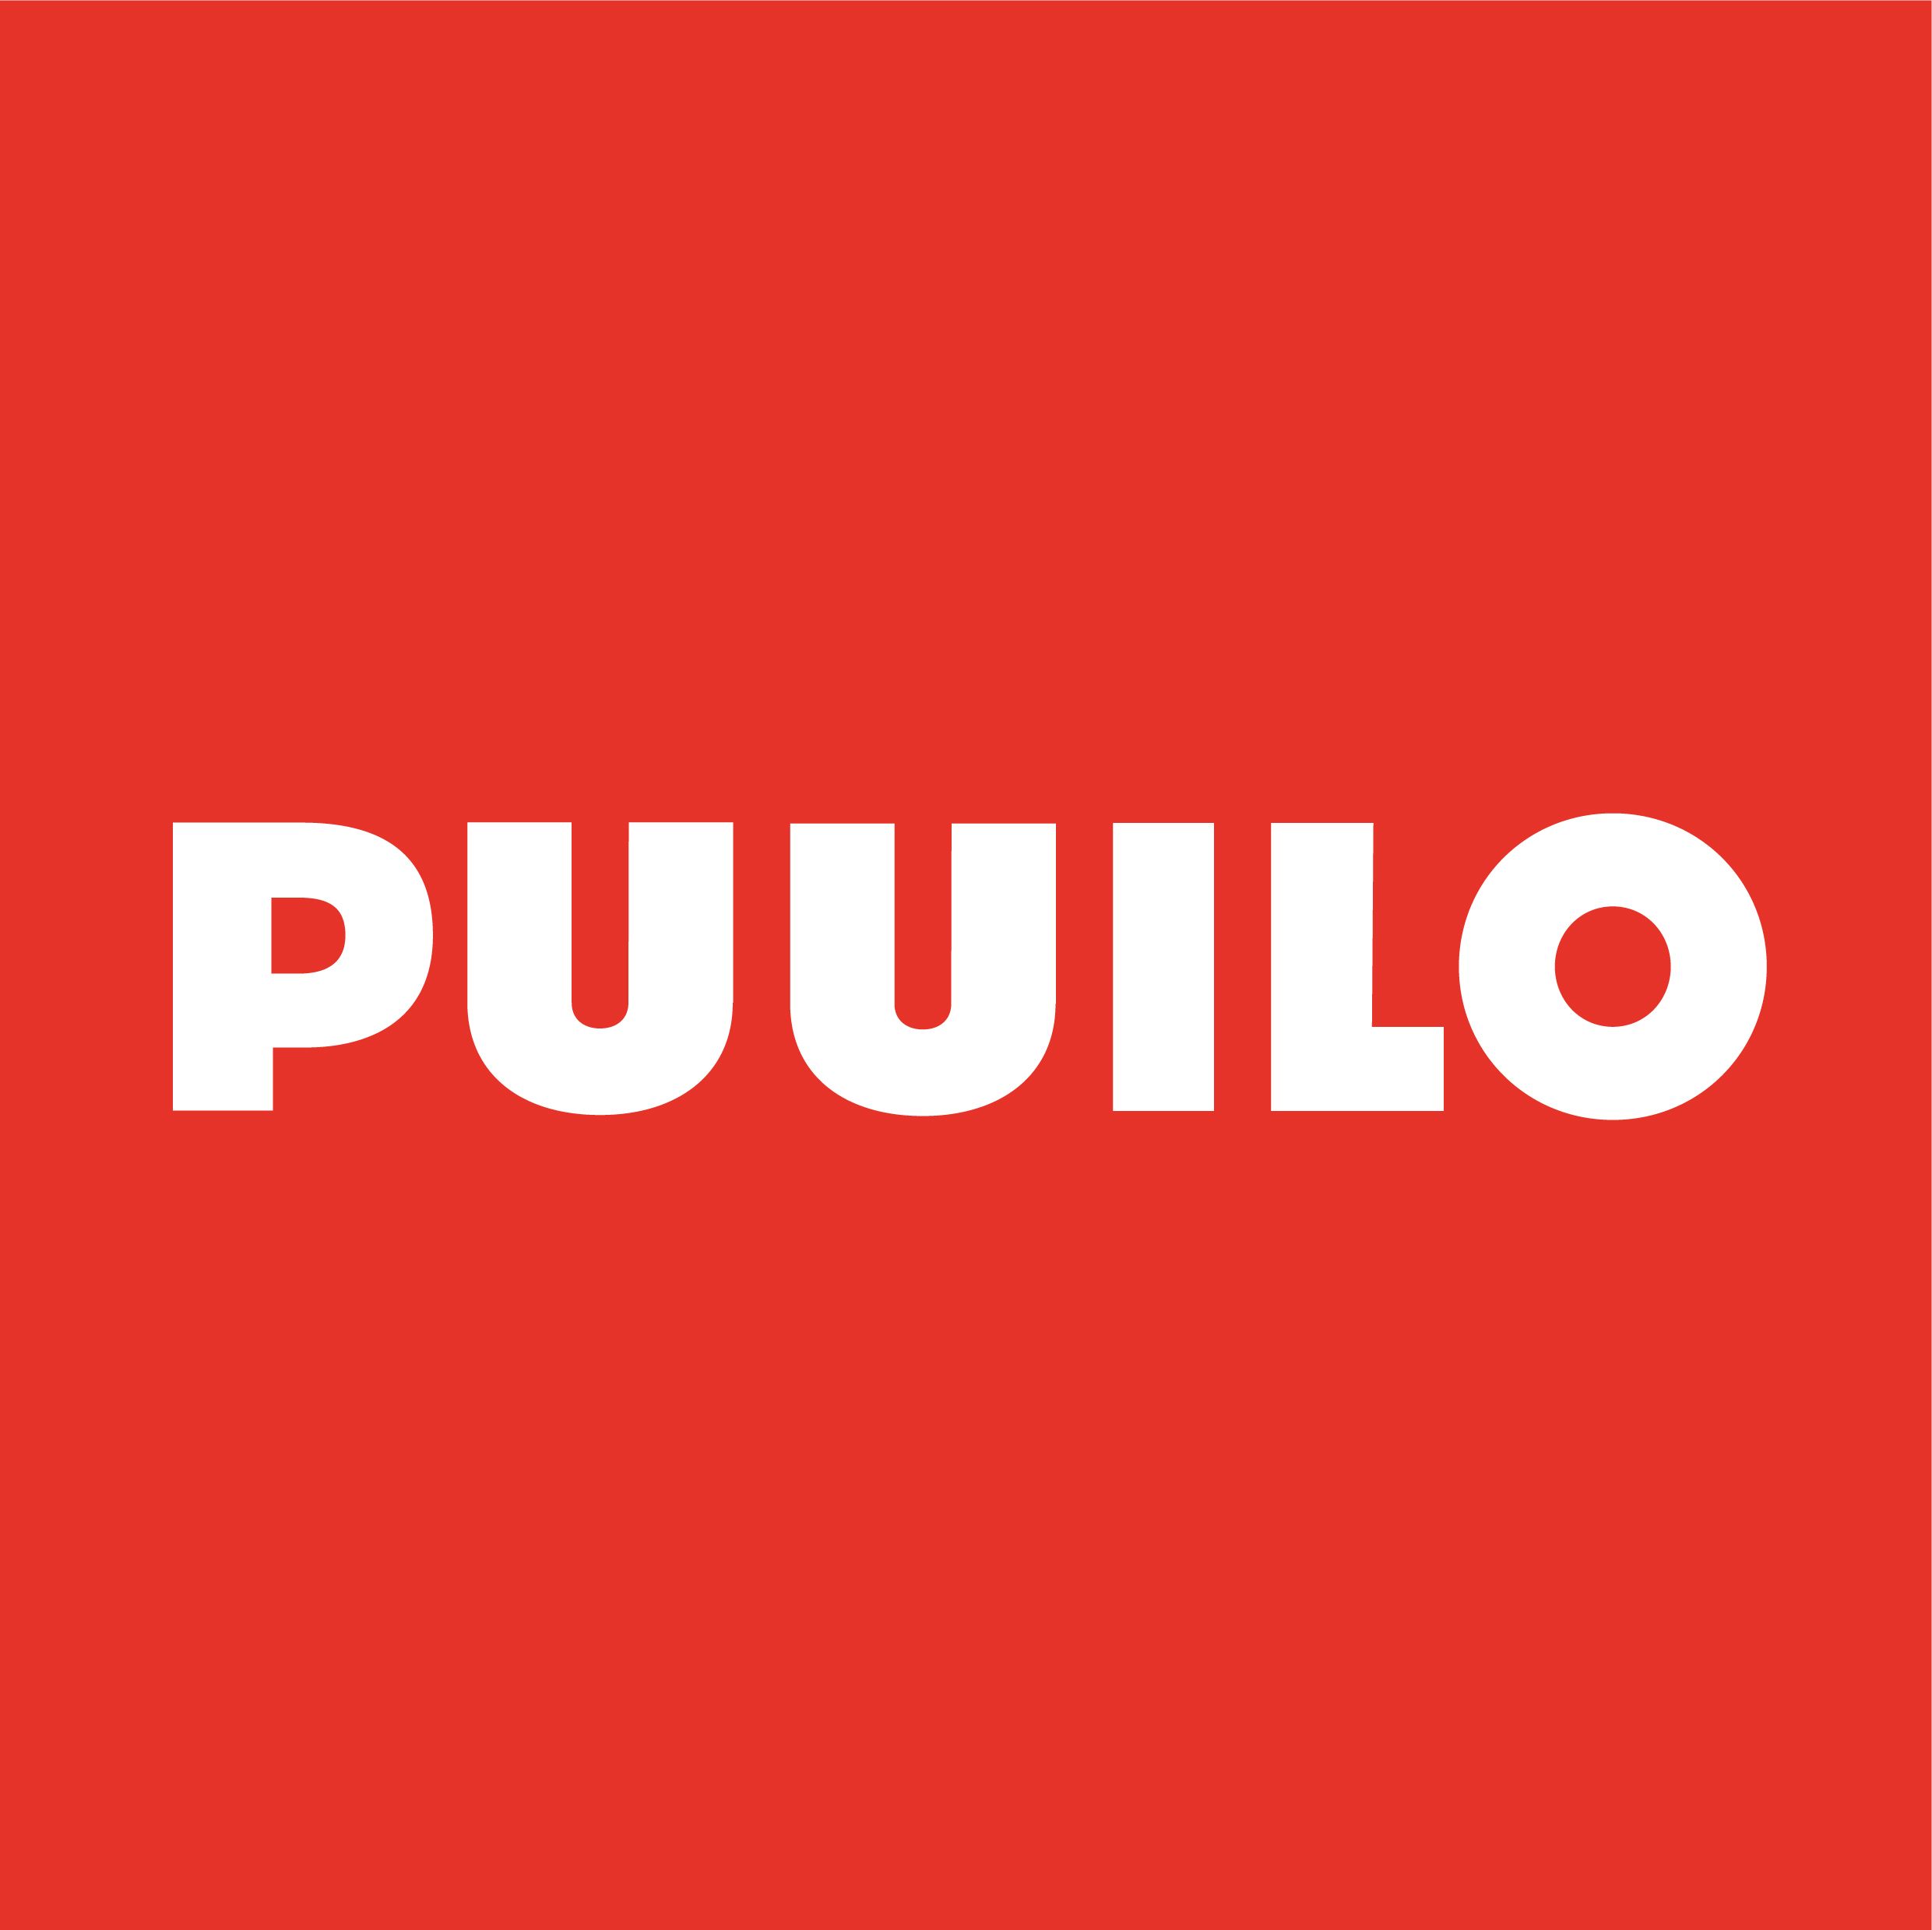 https://inderes-ir-pages-dev-assets.storage.googleapis.com/puuilo/images/puuilo-logo-2.jpg